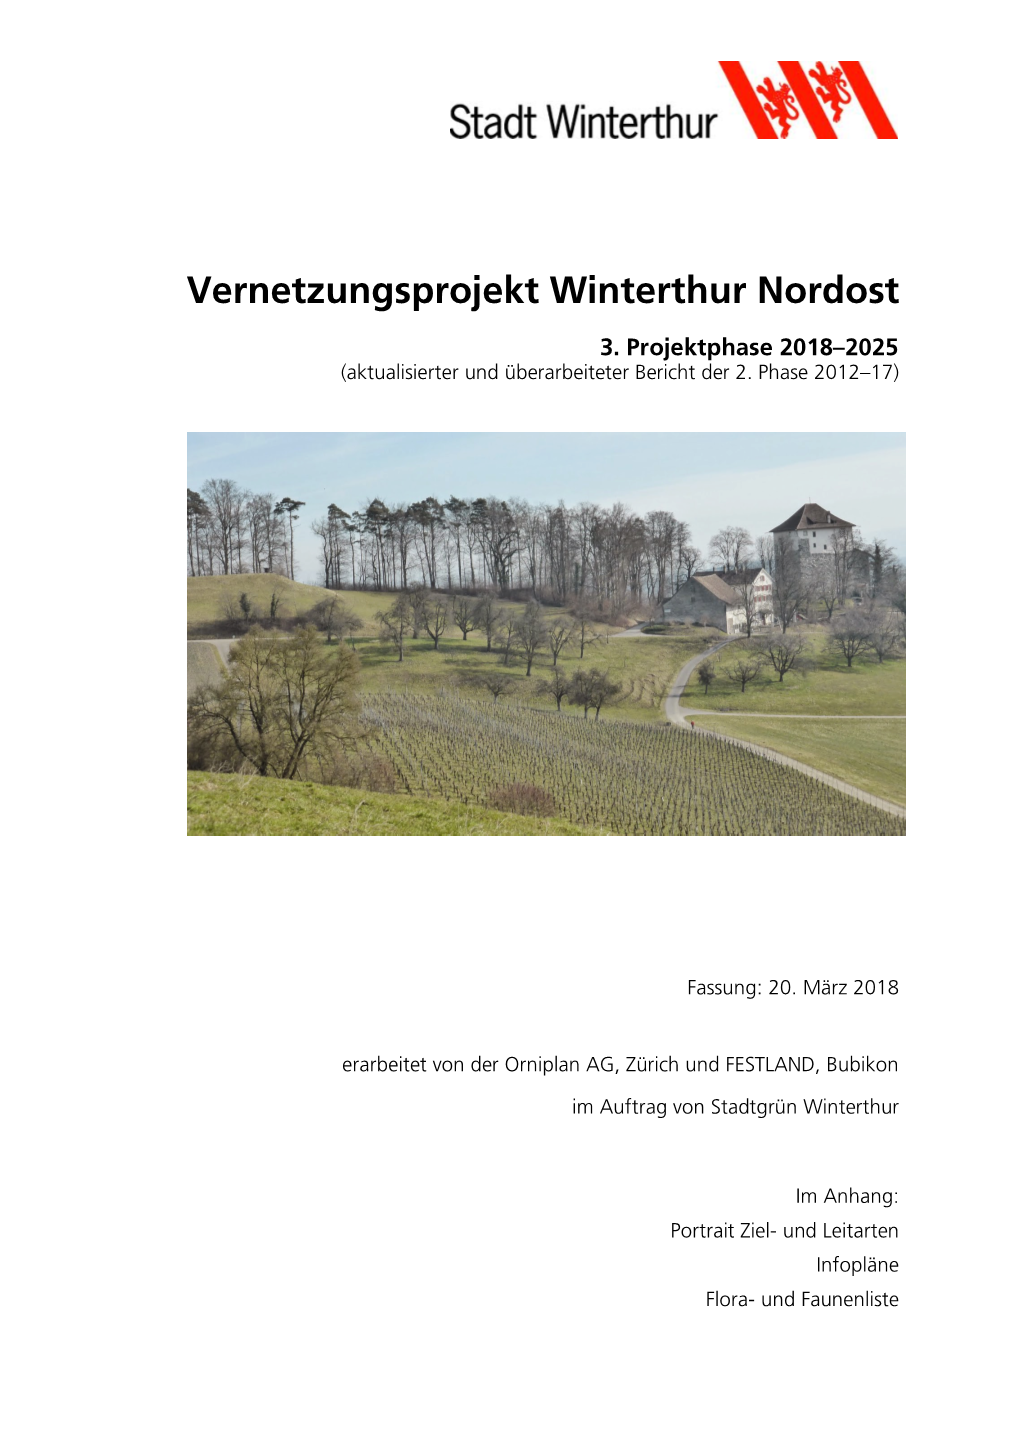 Vernetzungsprojekt Winterthur Nordost